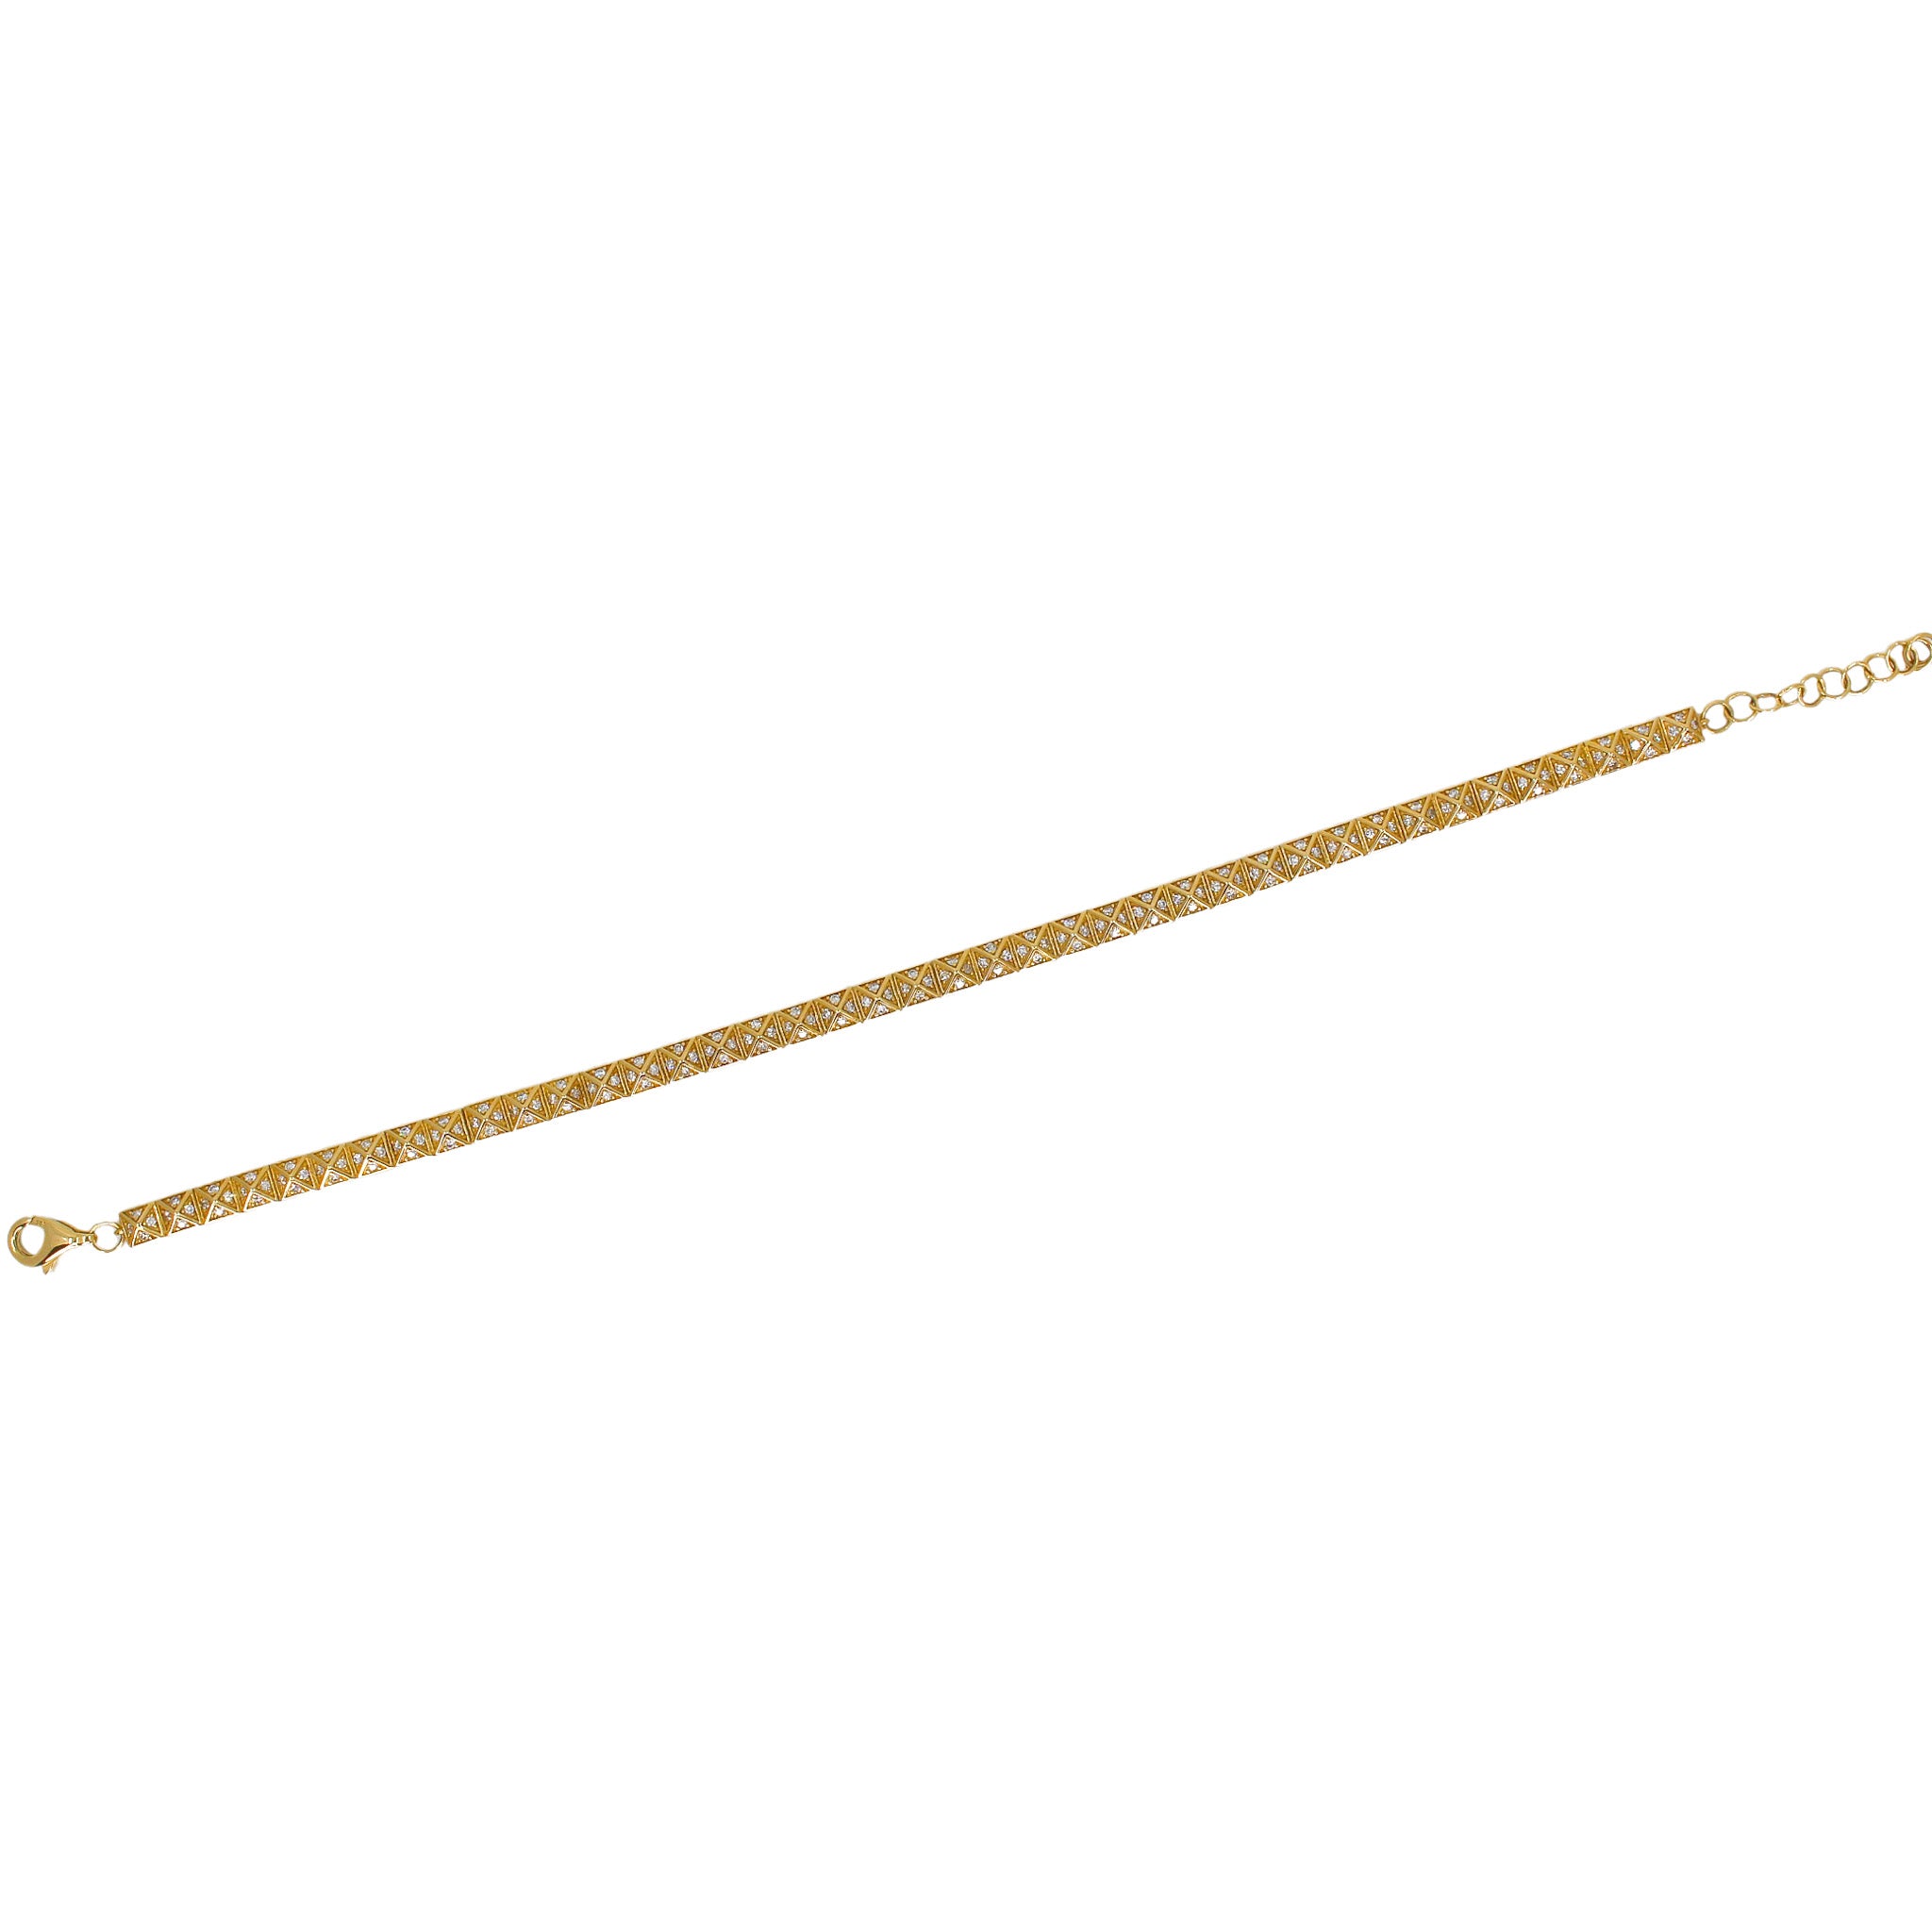 Gold Diamond Pyramid Bracelet - 14KT Gold - Monisha Melwani Jewelry